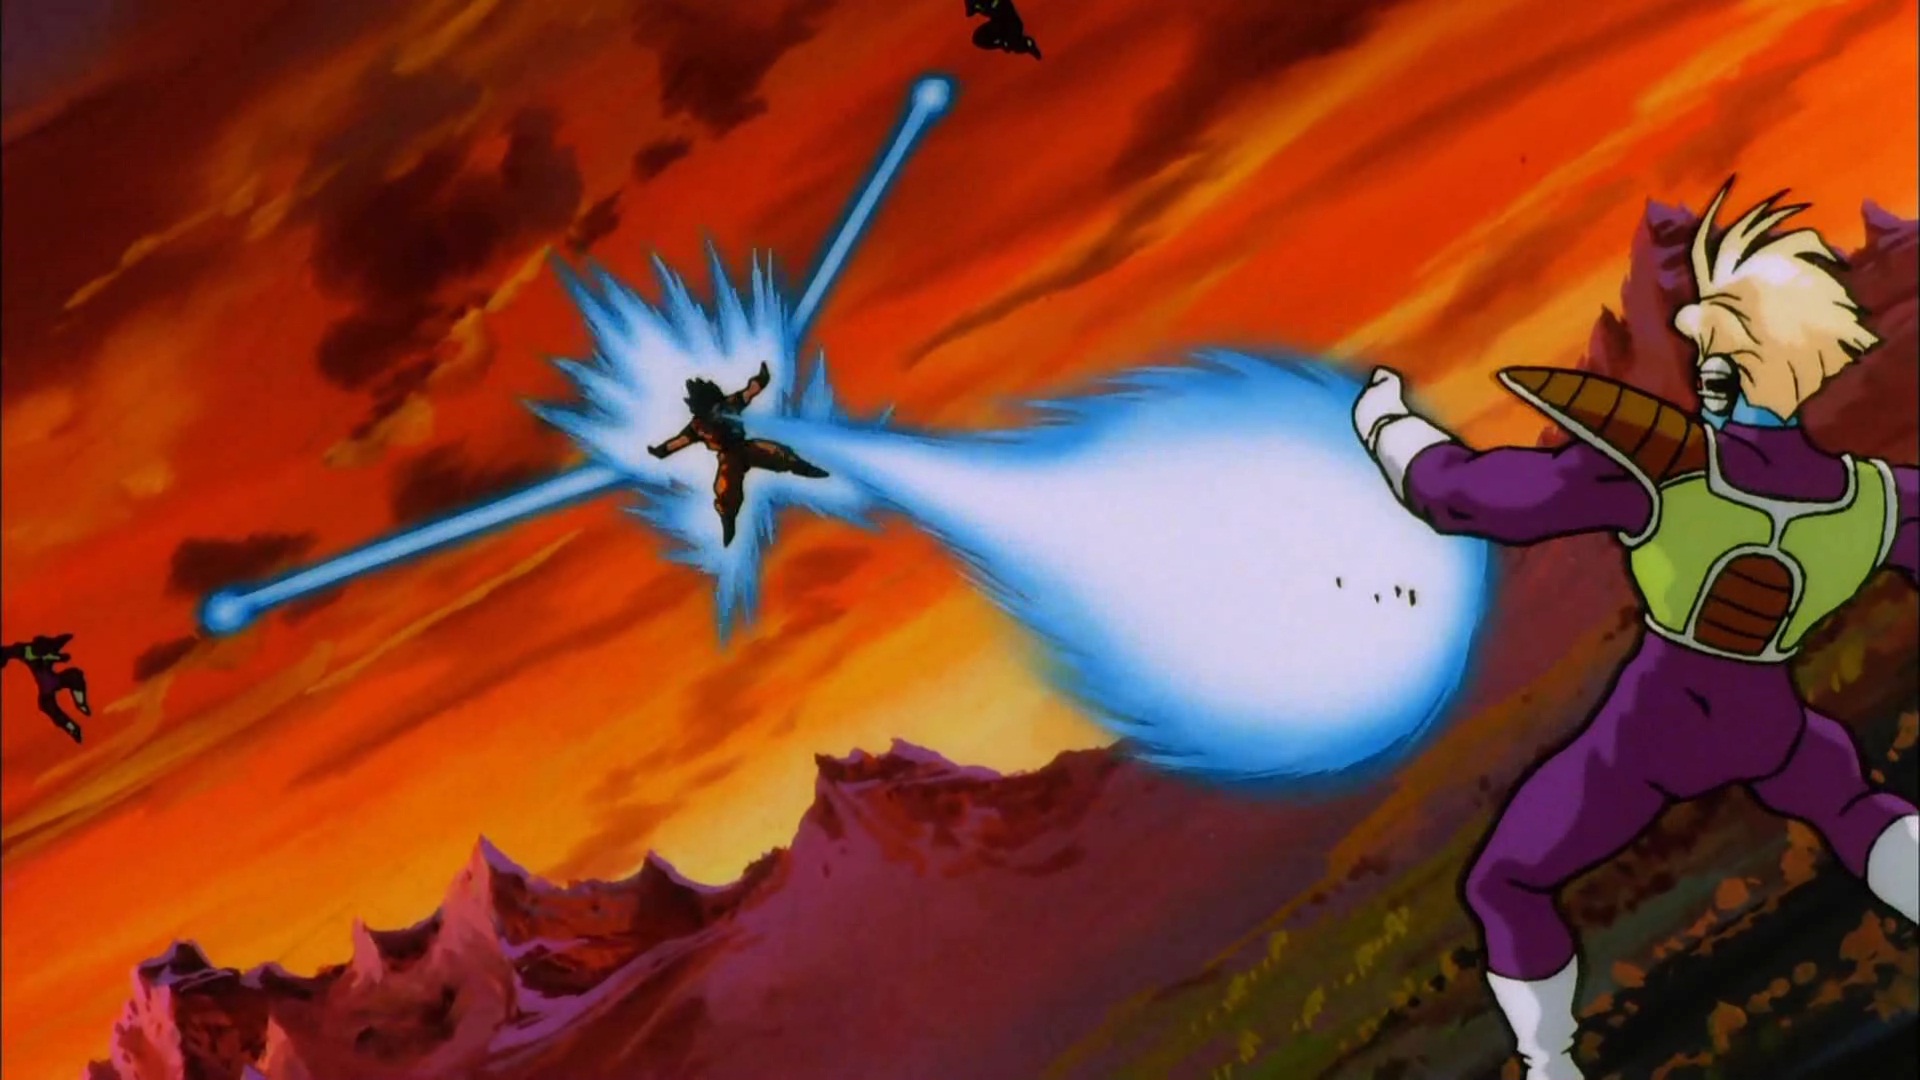 Goten Gohan and Goku fire the Family Kamehameha against Broly